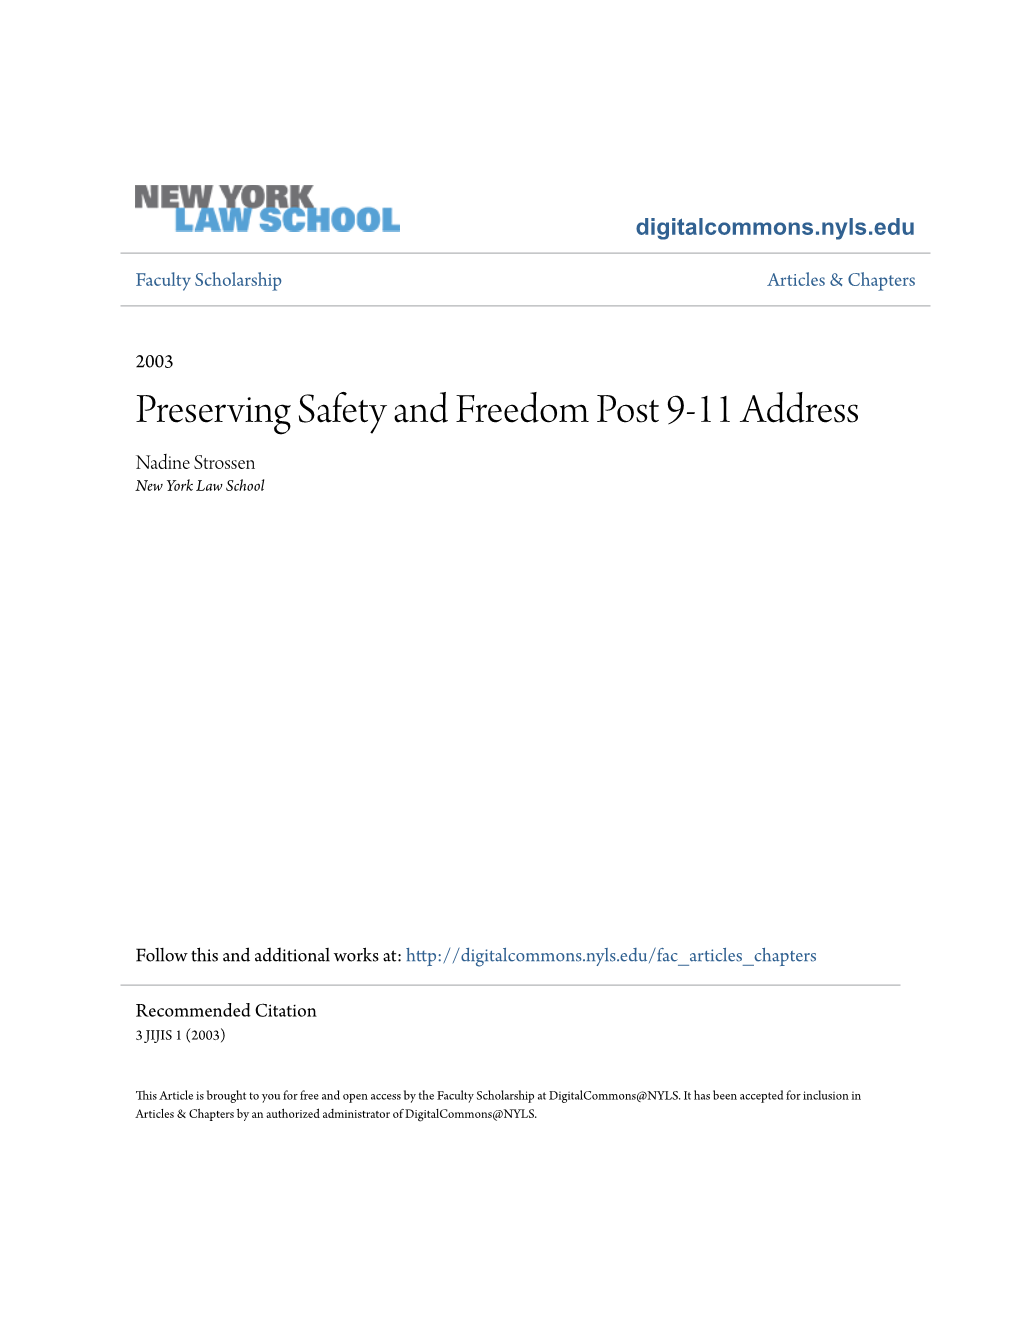 Preserving Safety and Freedom Post 9-11 Address Nadine Strossen New York Law School